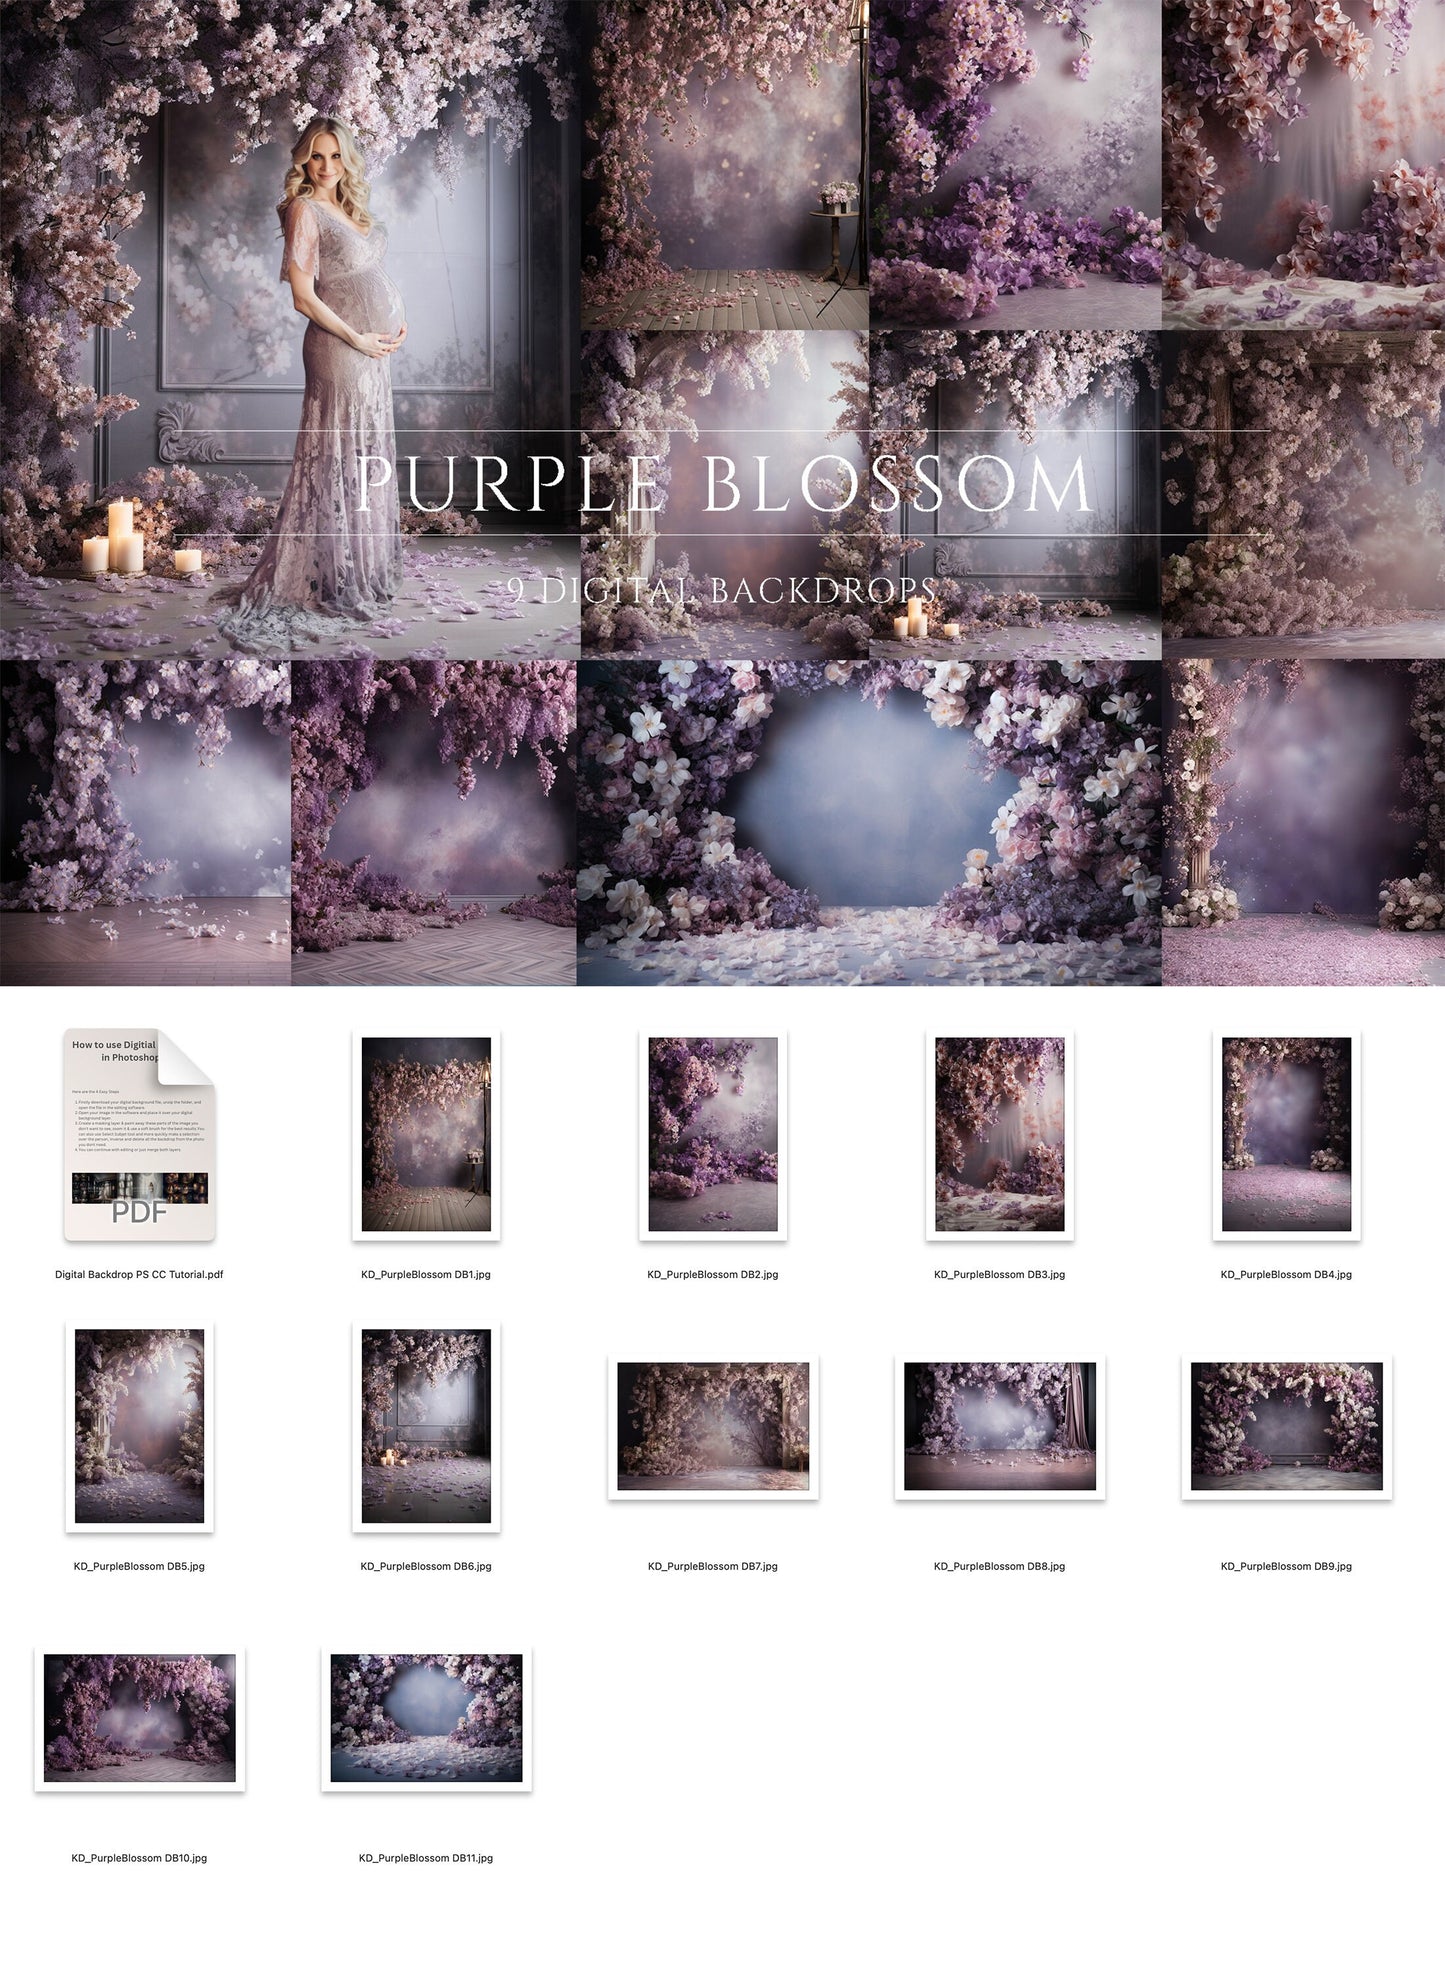 9 Purple Blossom Floral Digital Backdrops